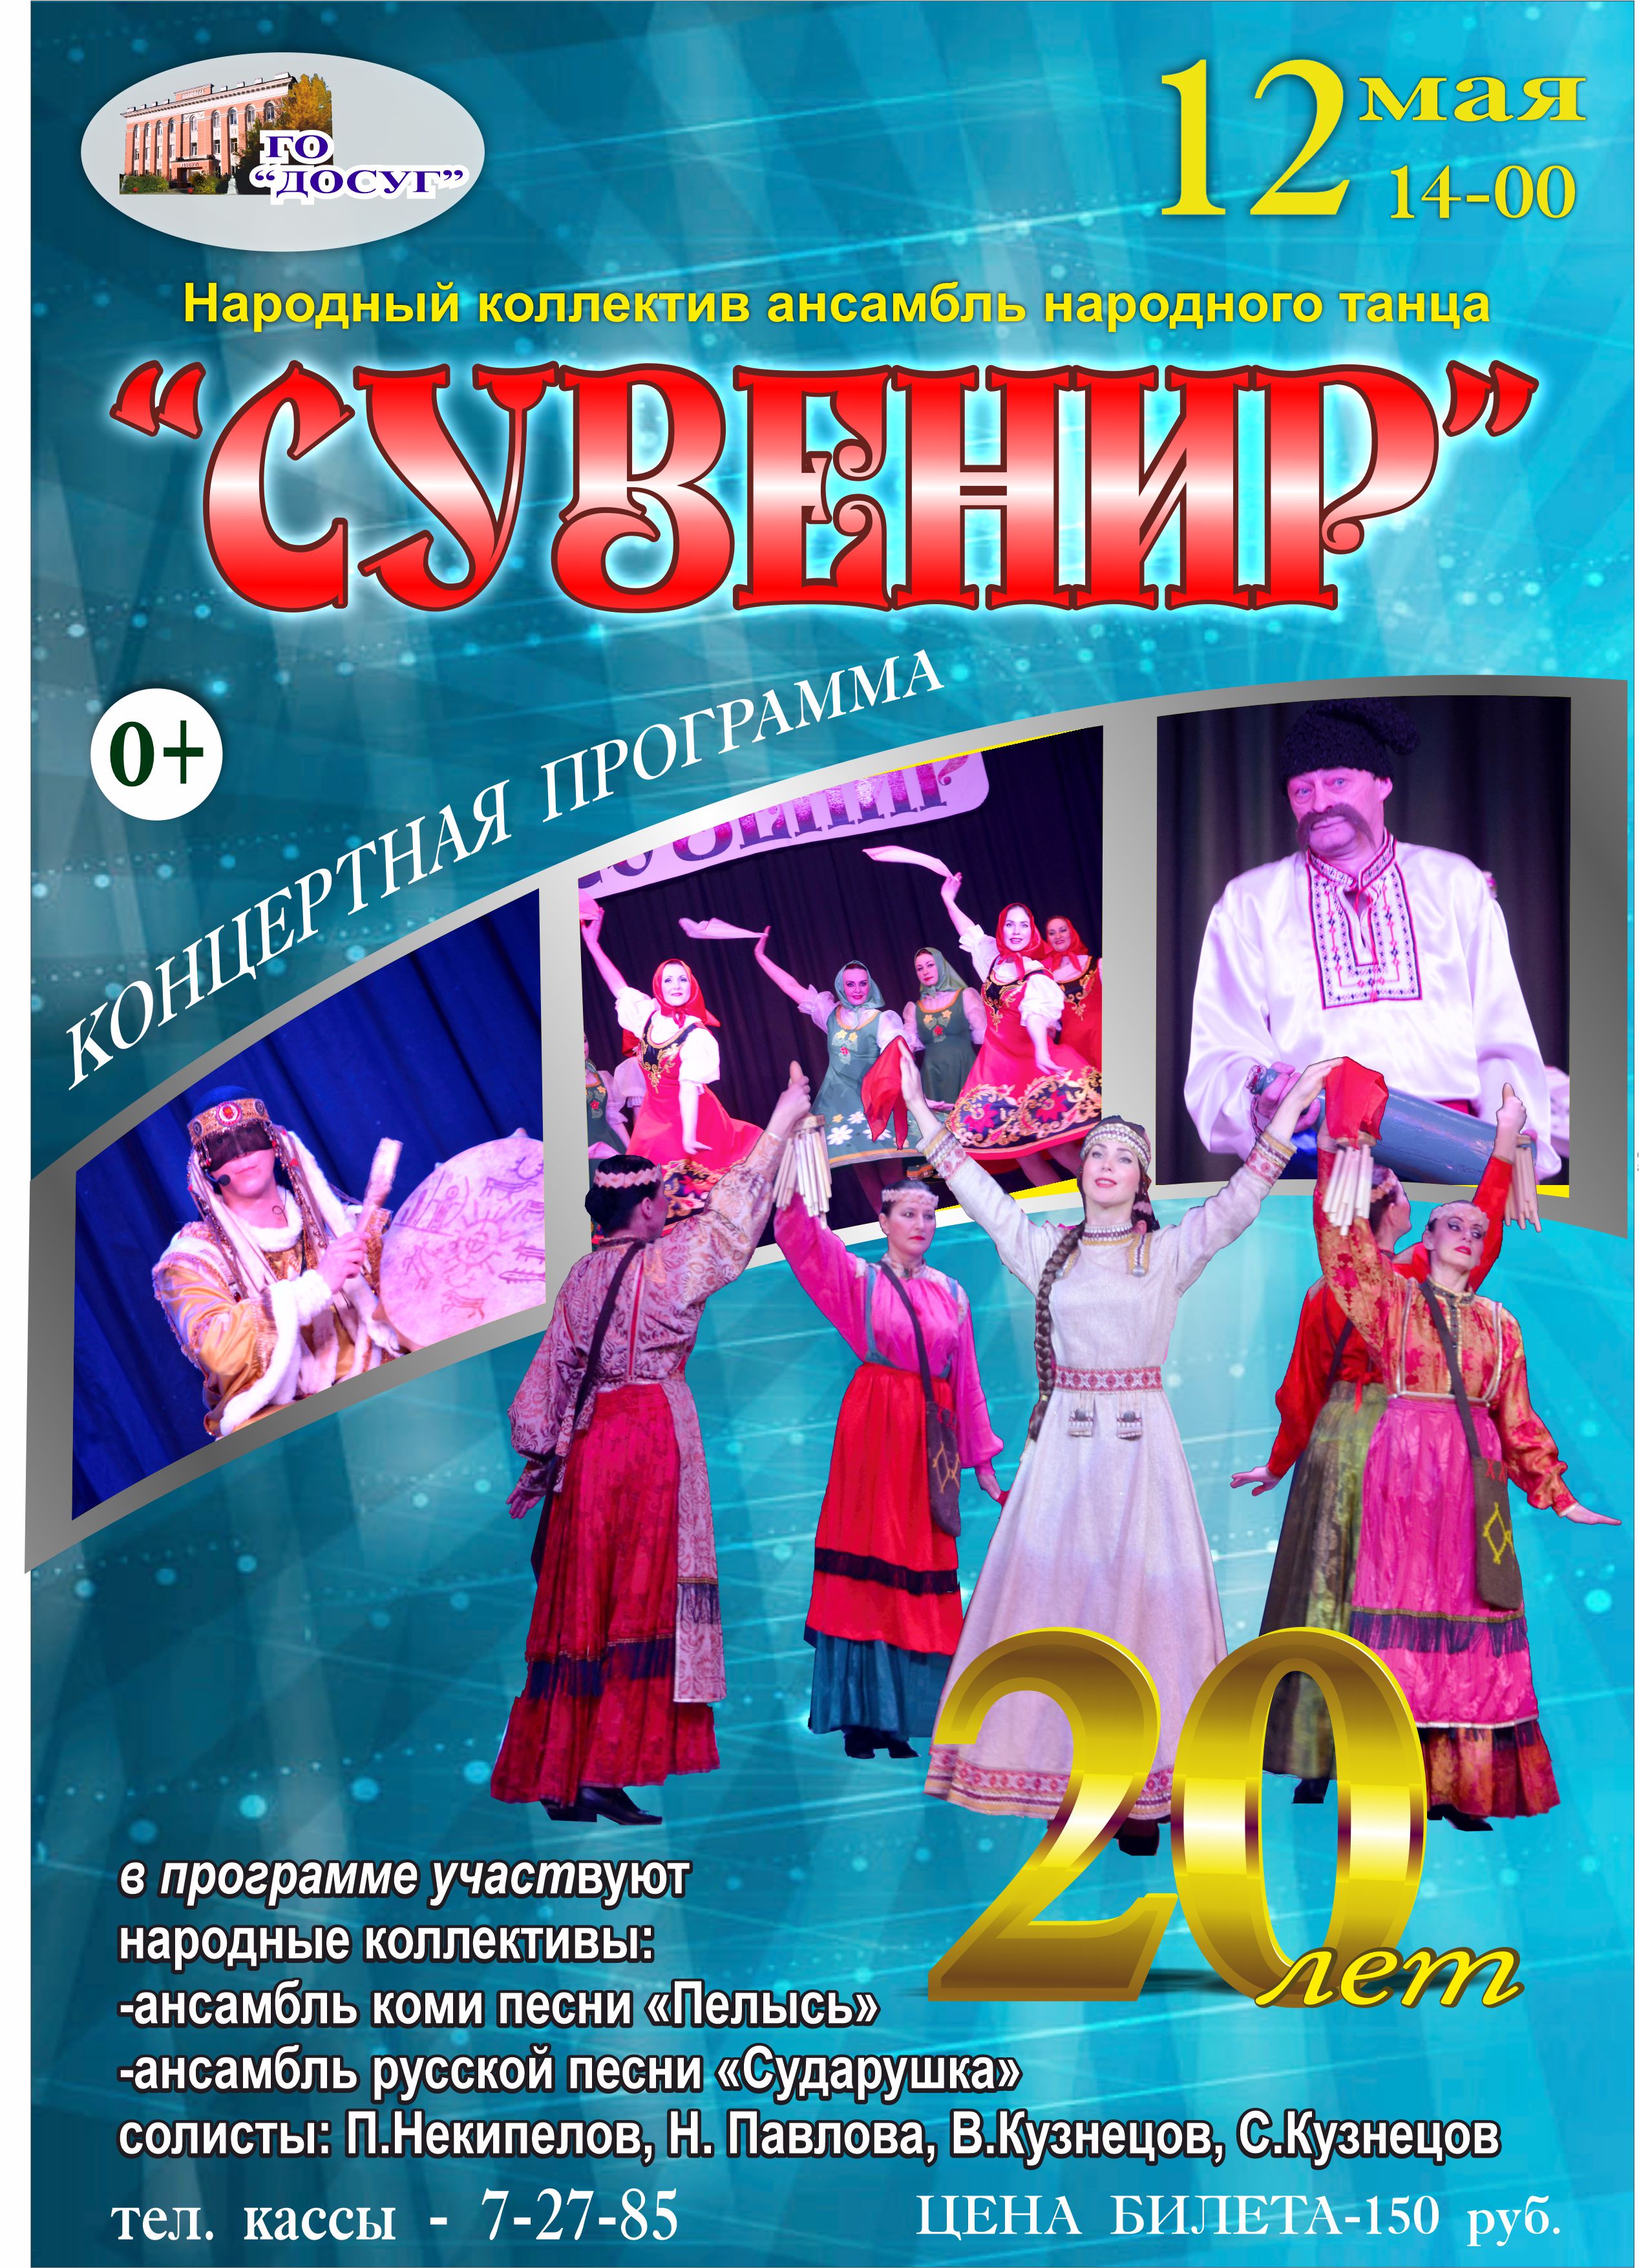 —- 12 мая в 14.00 Концертная программа народного коллектива ансамбля народного танца «Сувенир» цена билета: 150 руб. возрастной ценз 0+